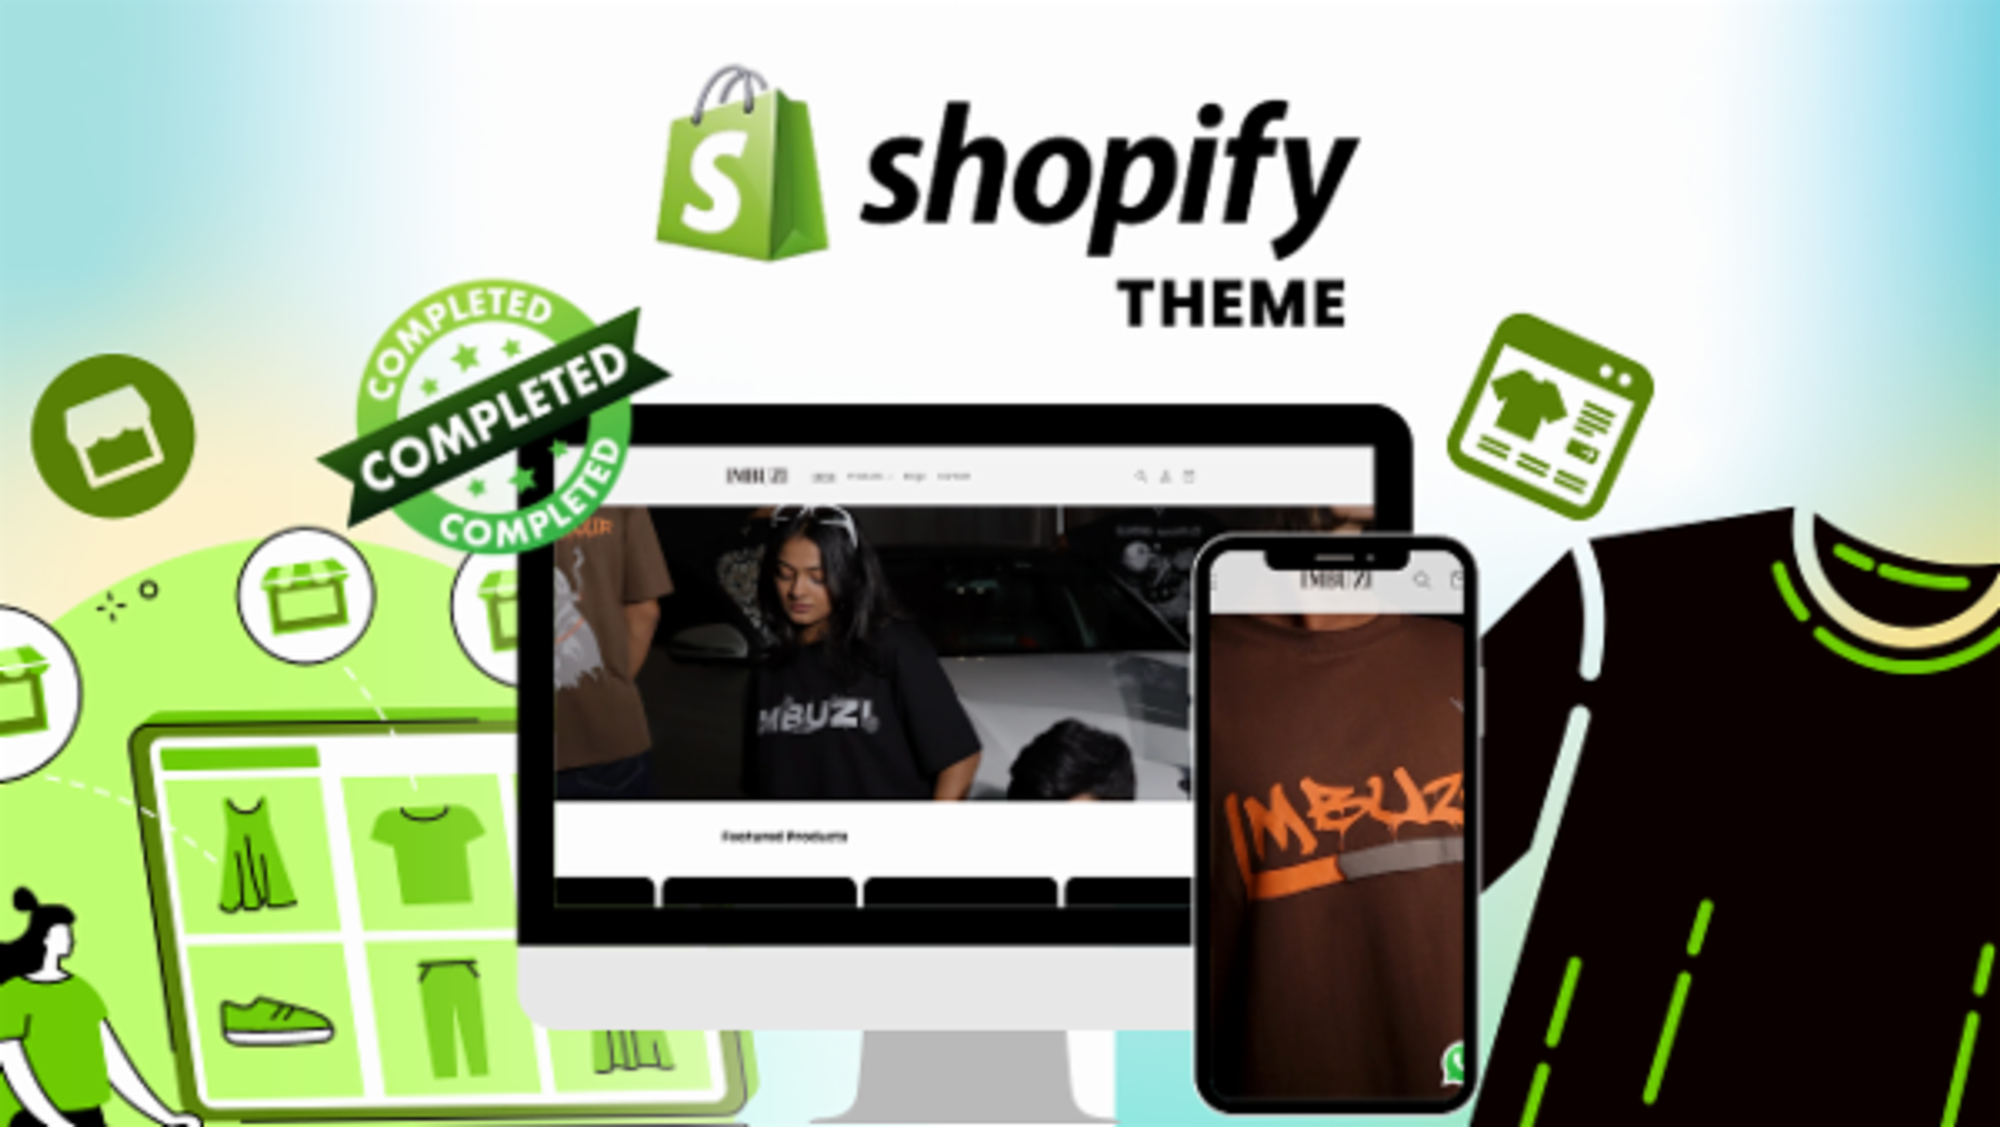 IMBUZI Shopify Theme (for Clothing Brands)